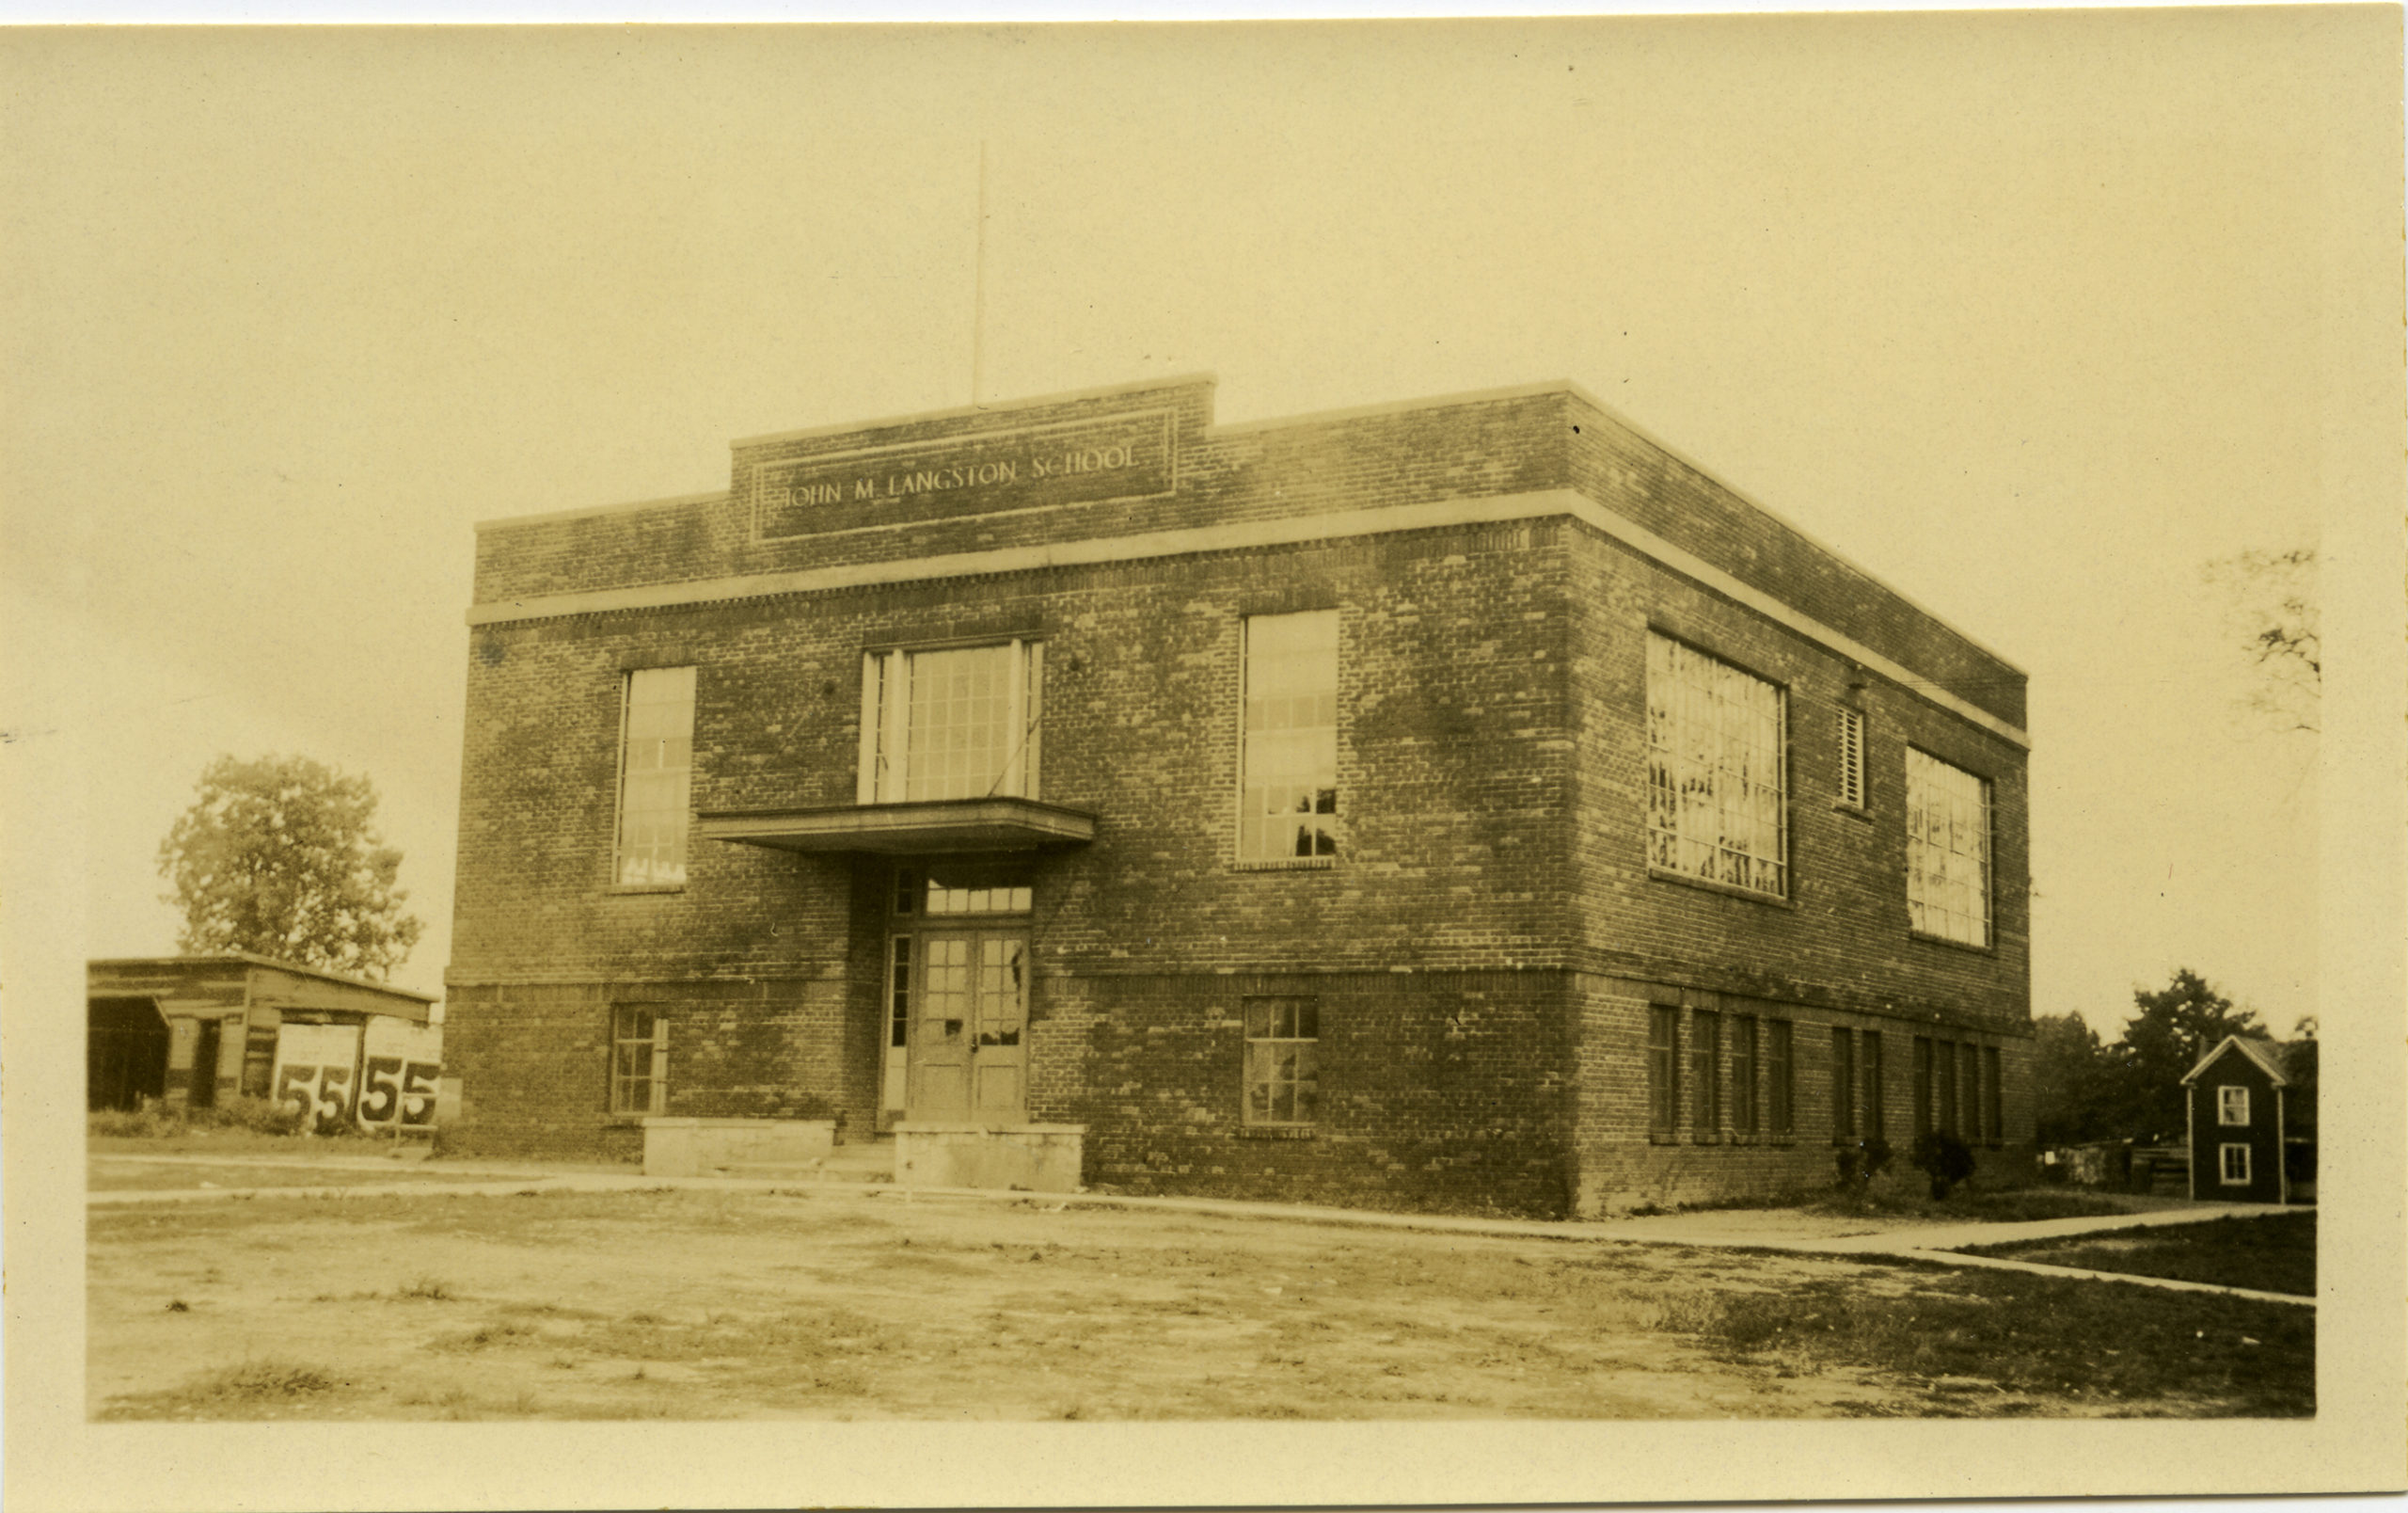 John Langston School, 1932. Source: Center for Local History, Arlington Public Library.